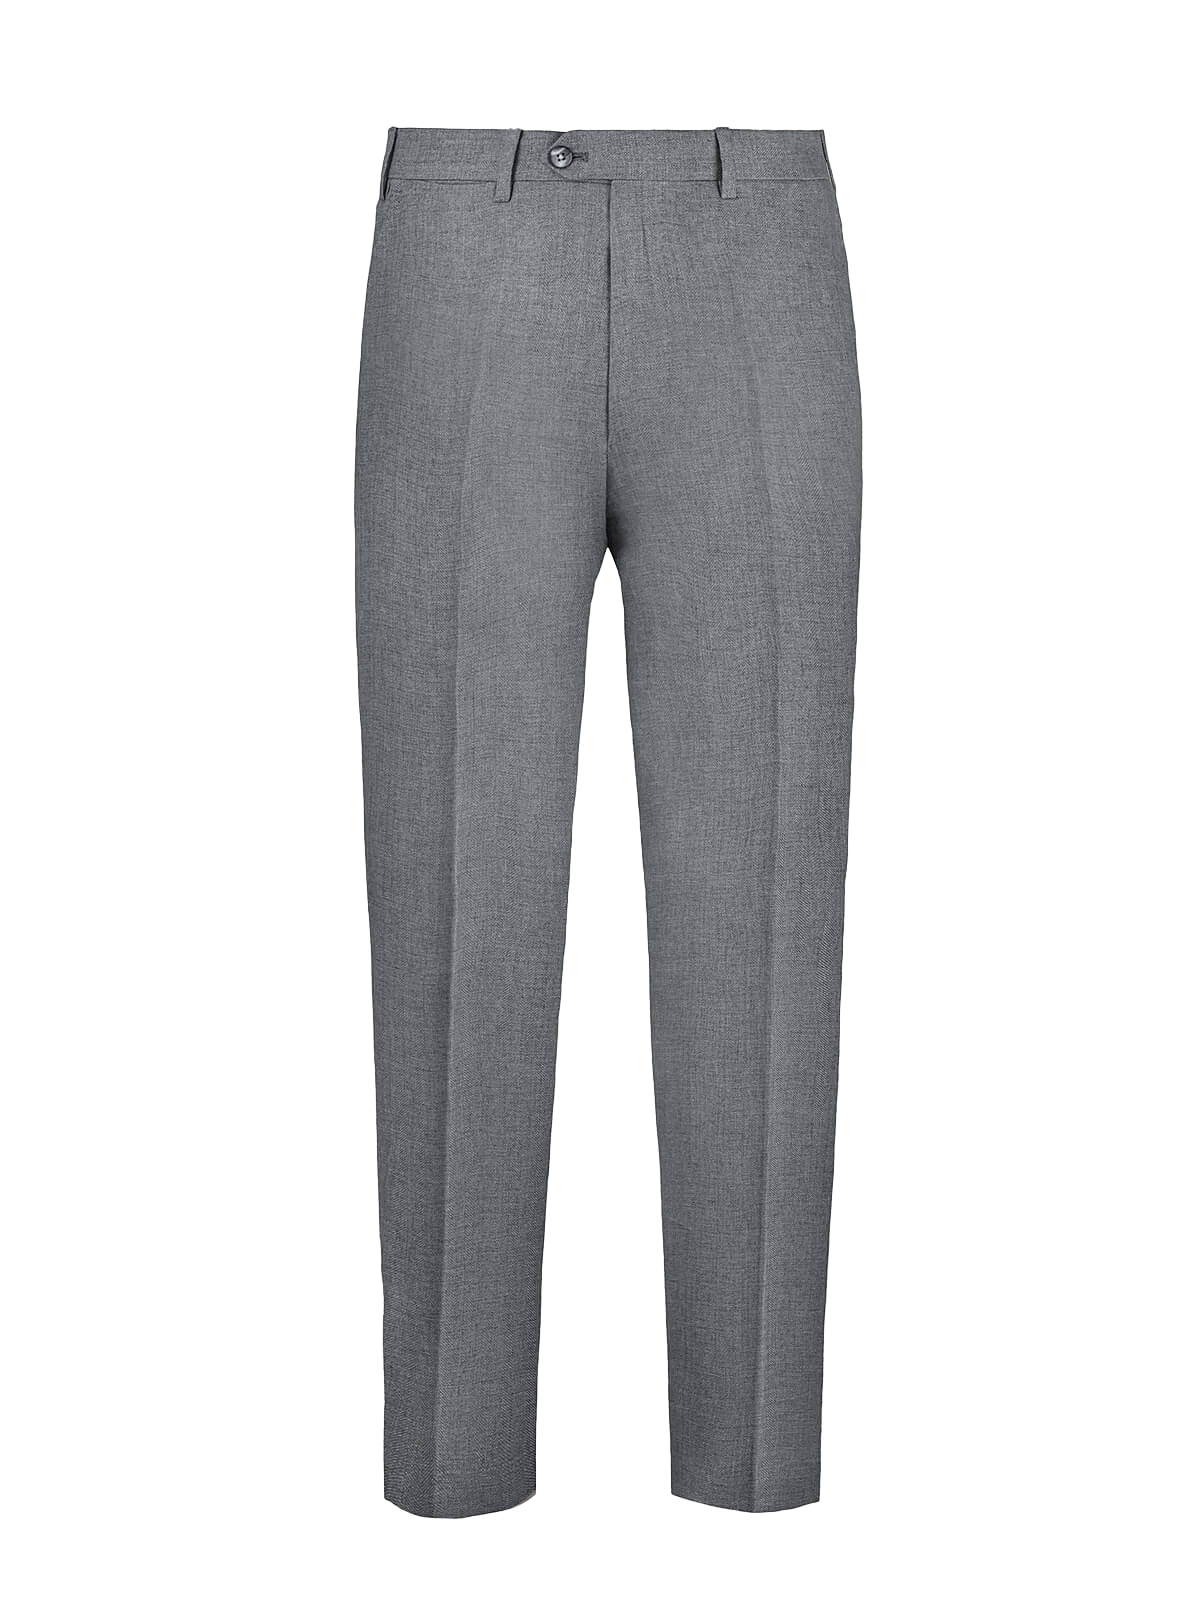 Pantalone Brezza 100% capri for man linen dark grey trouser front